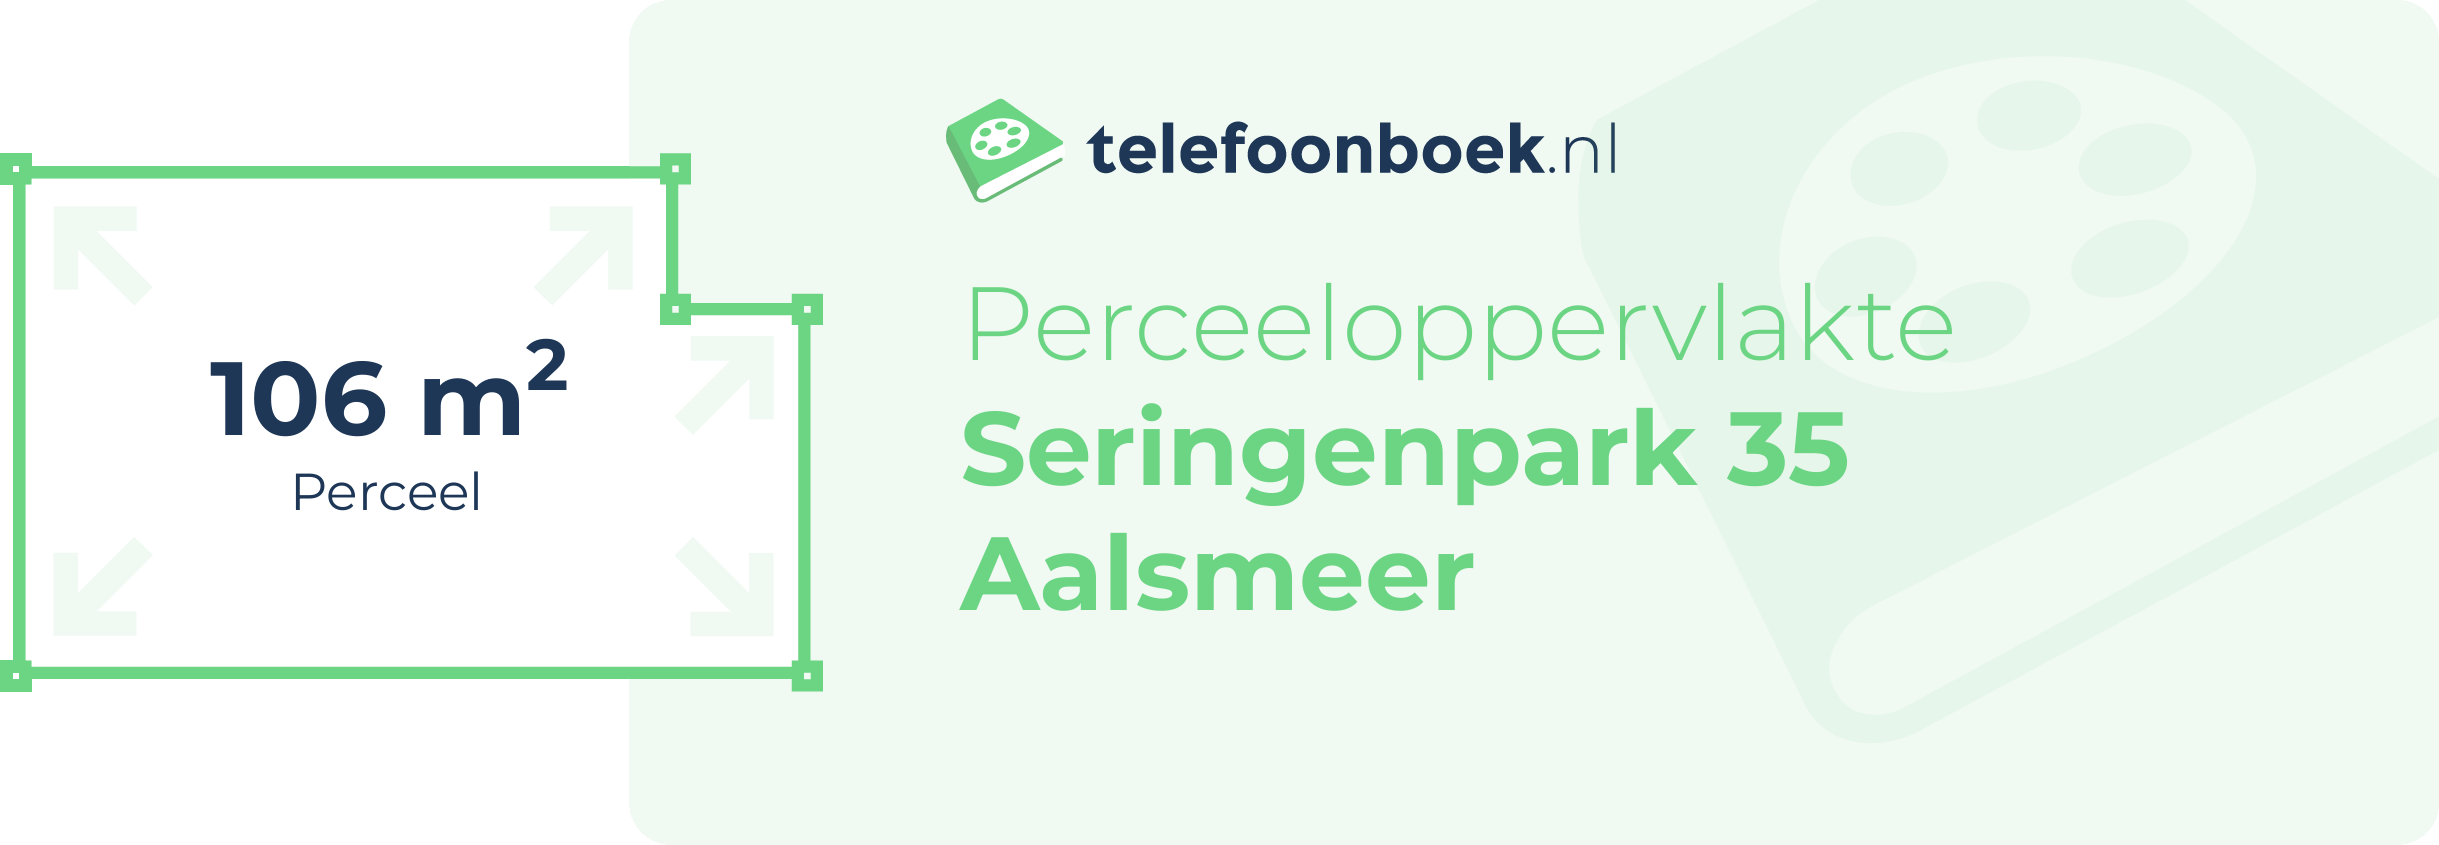 Perceeloppervlakte Seringenpark 35 Aalsmeer